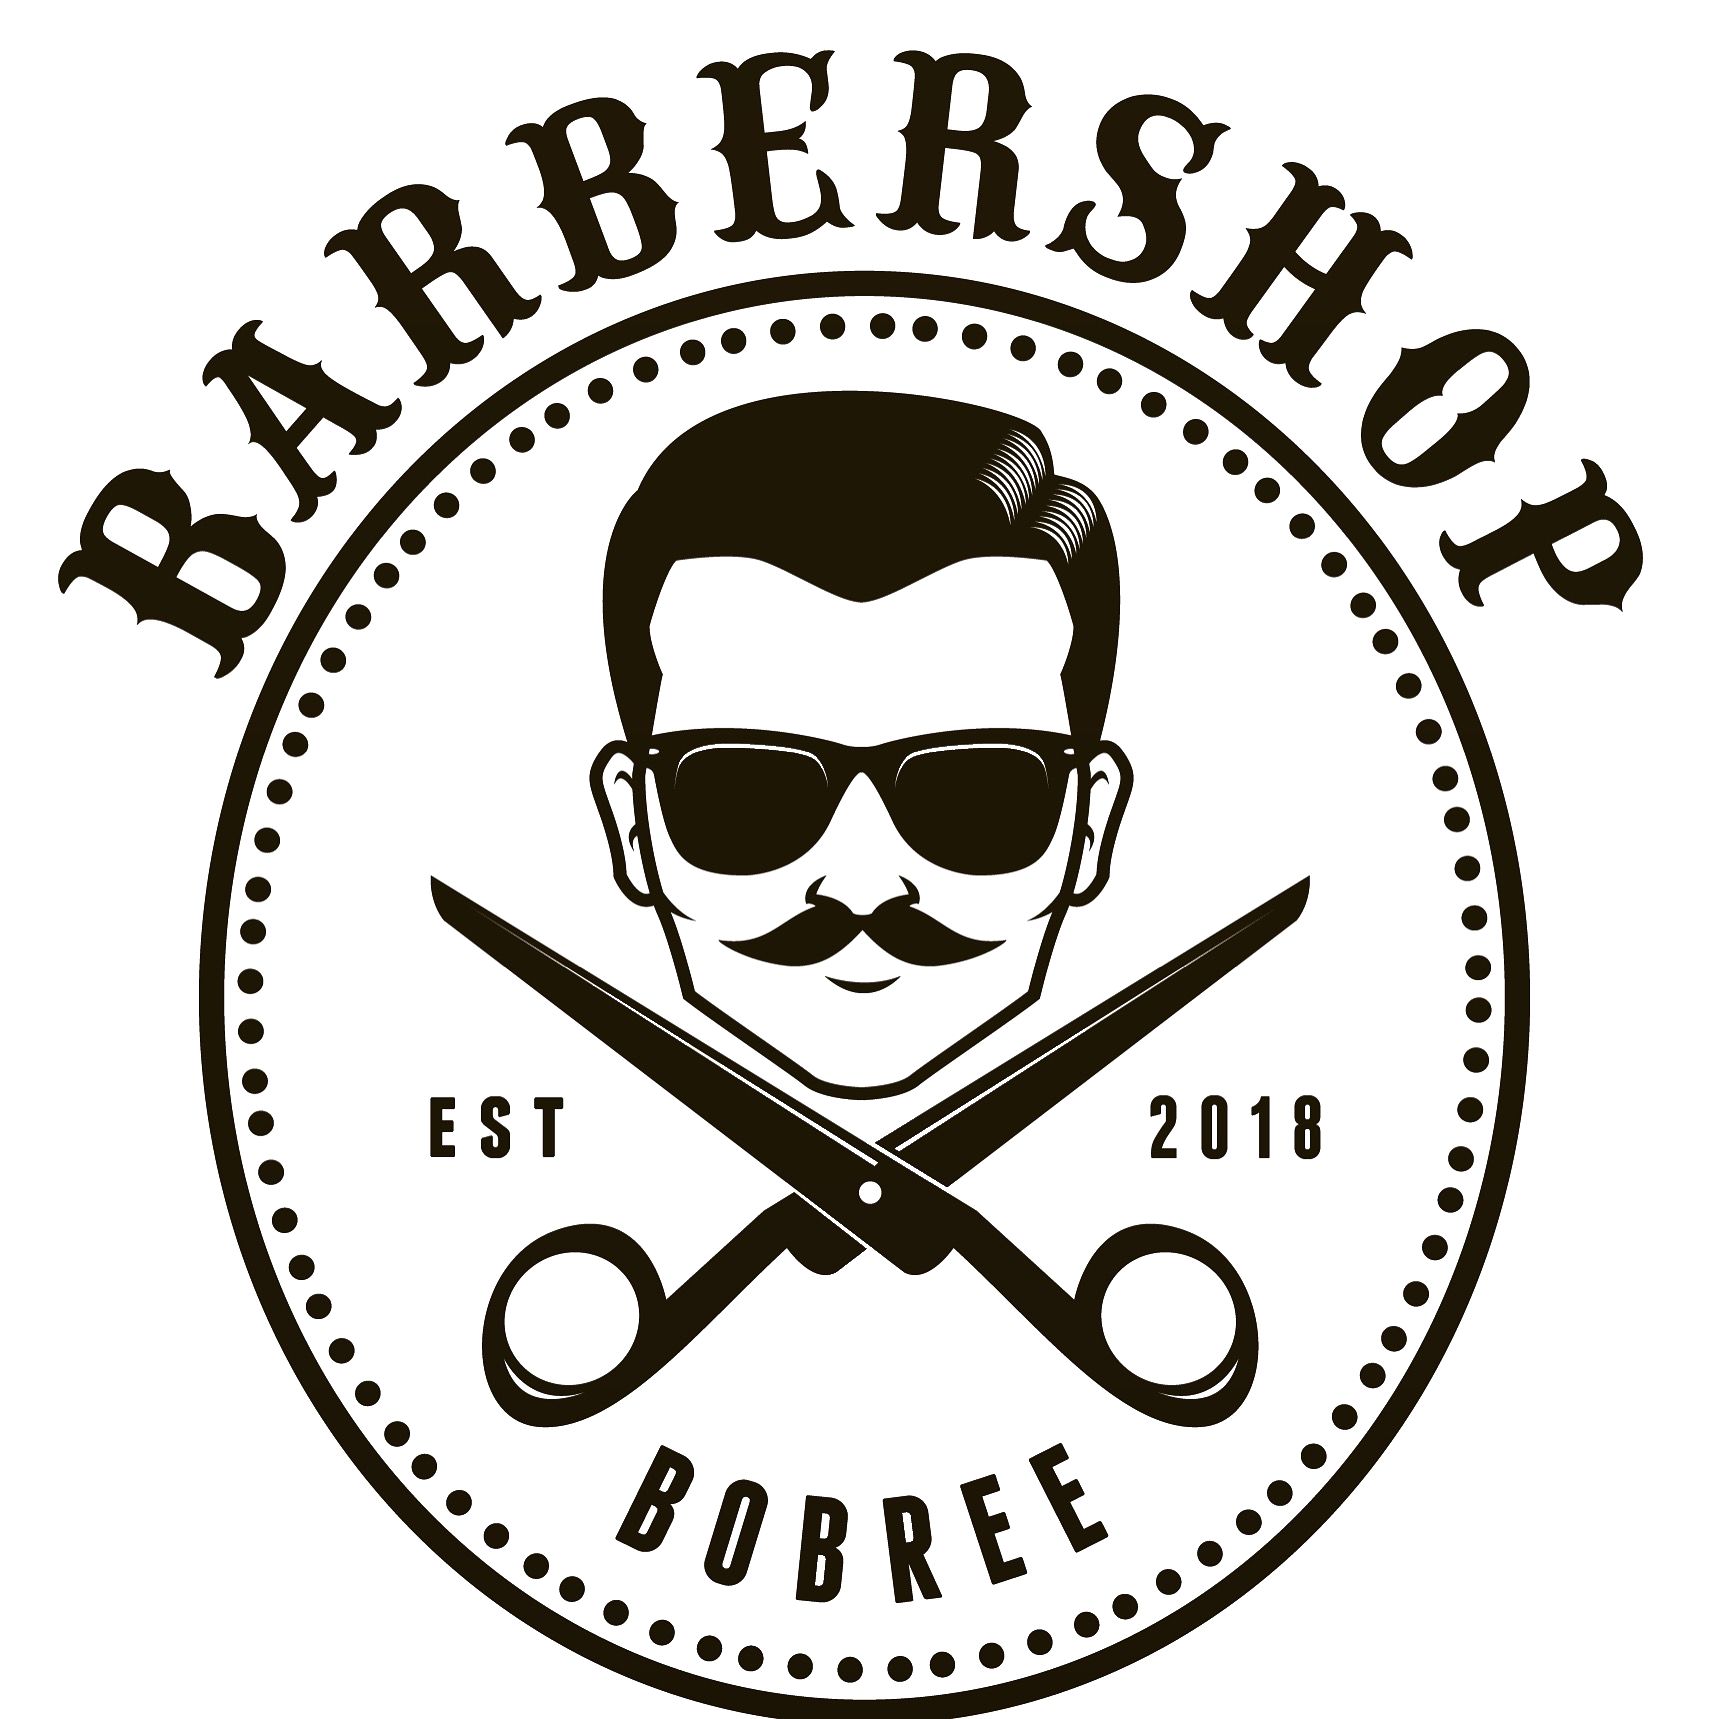 Bobree Barbershop